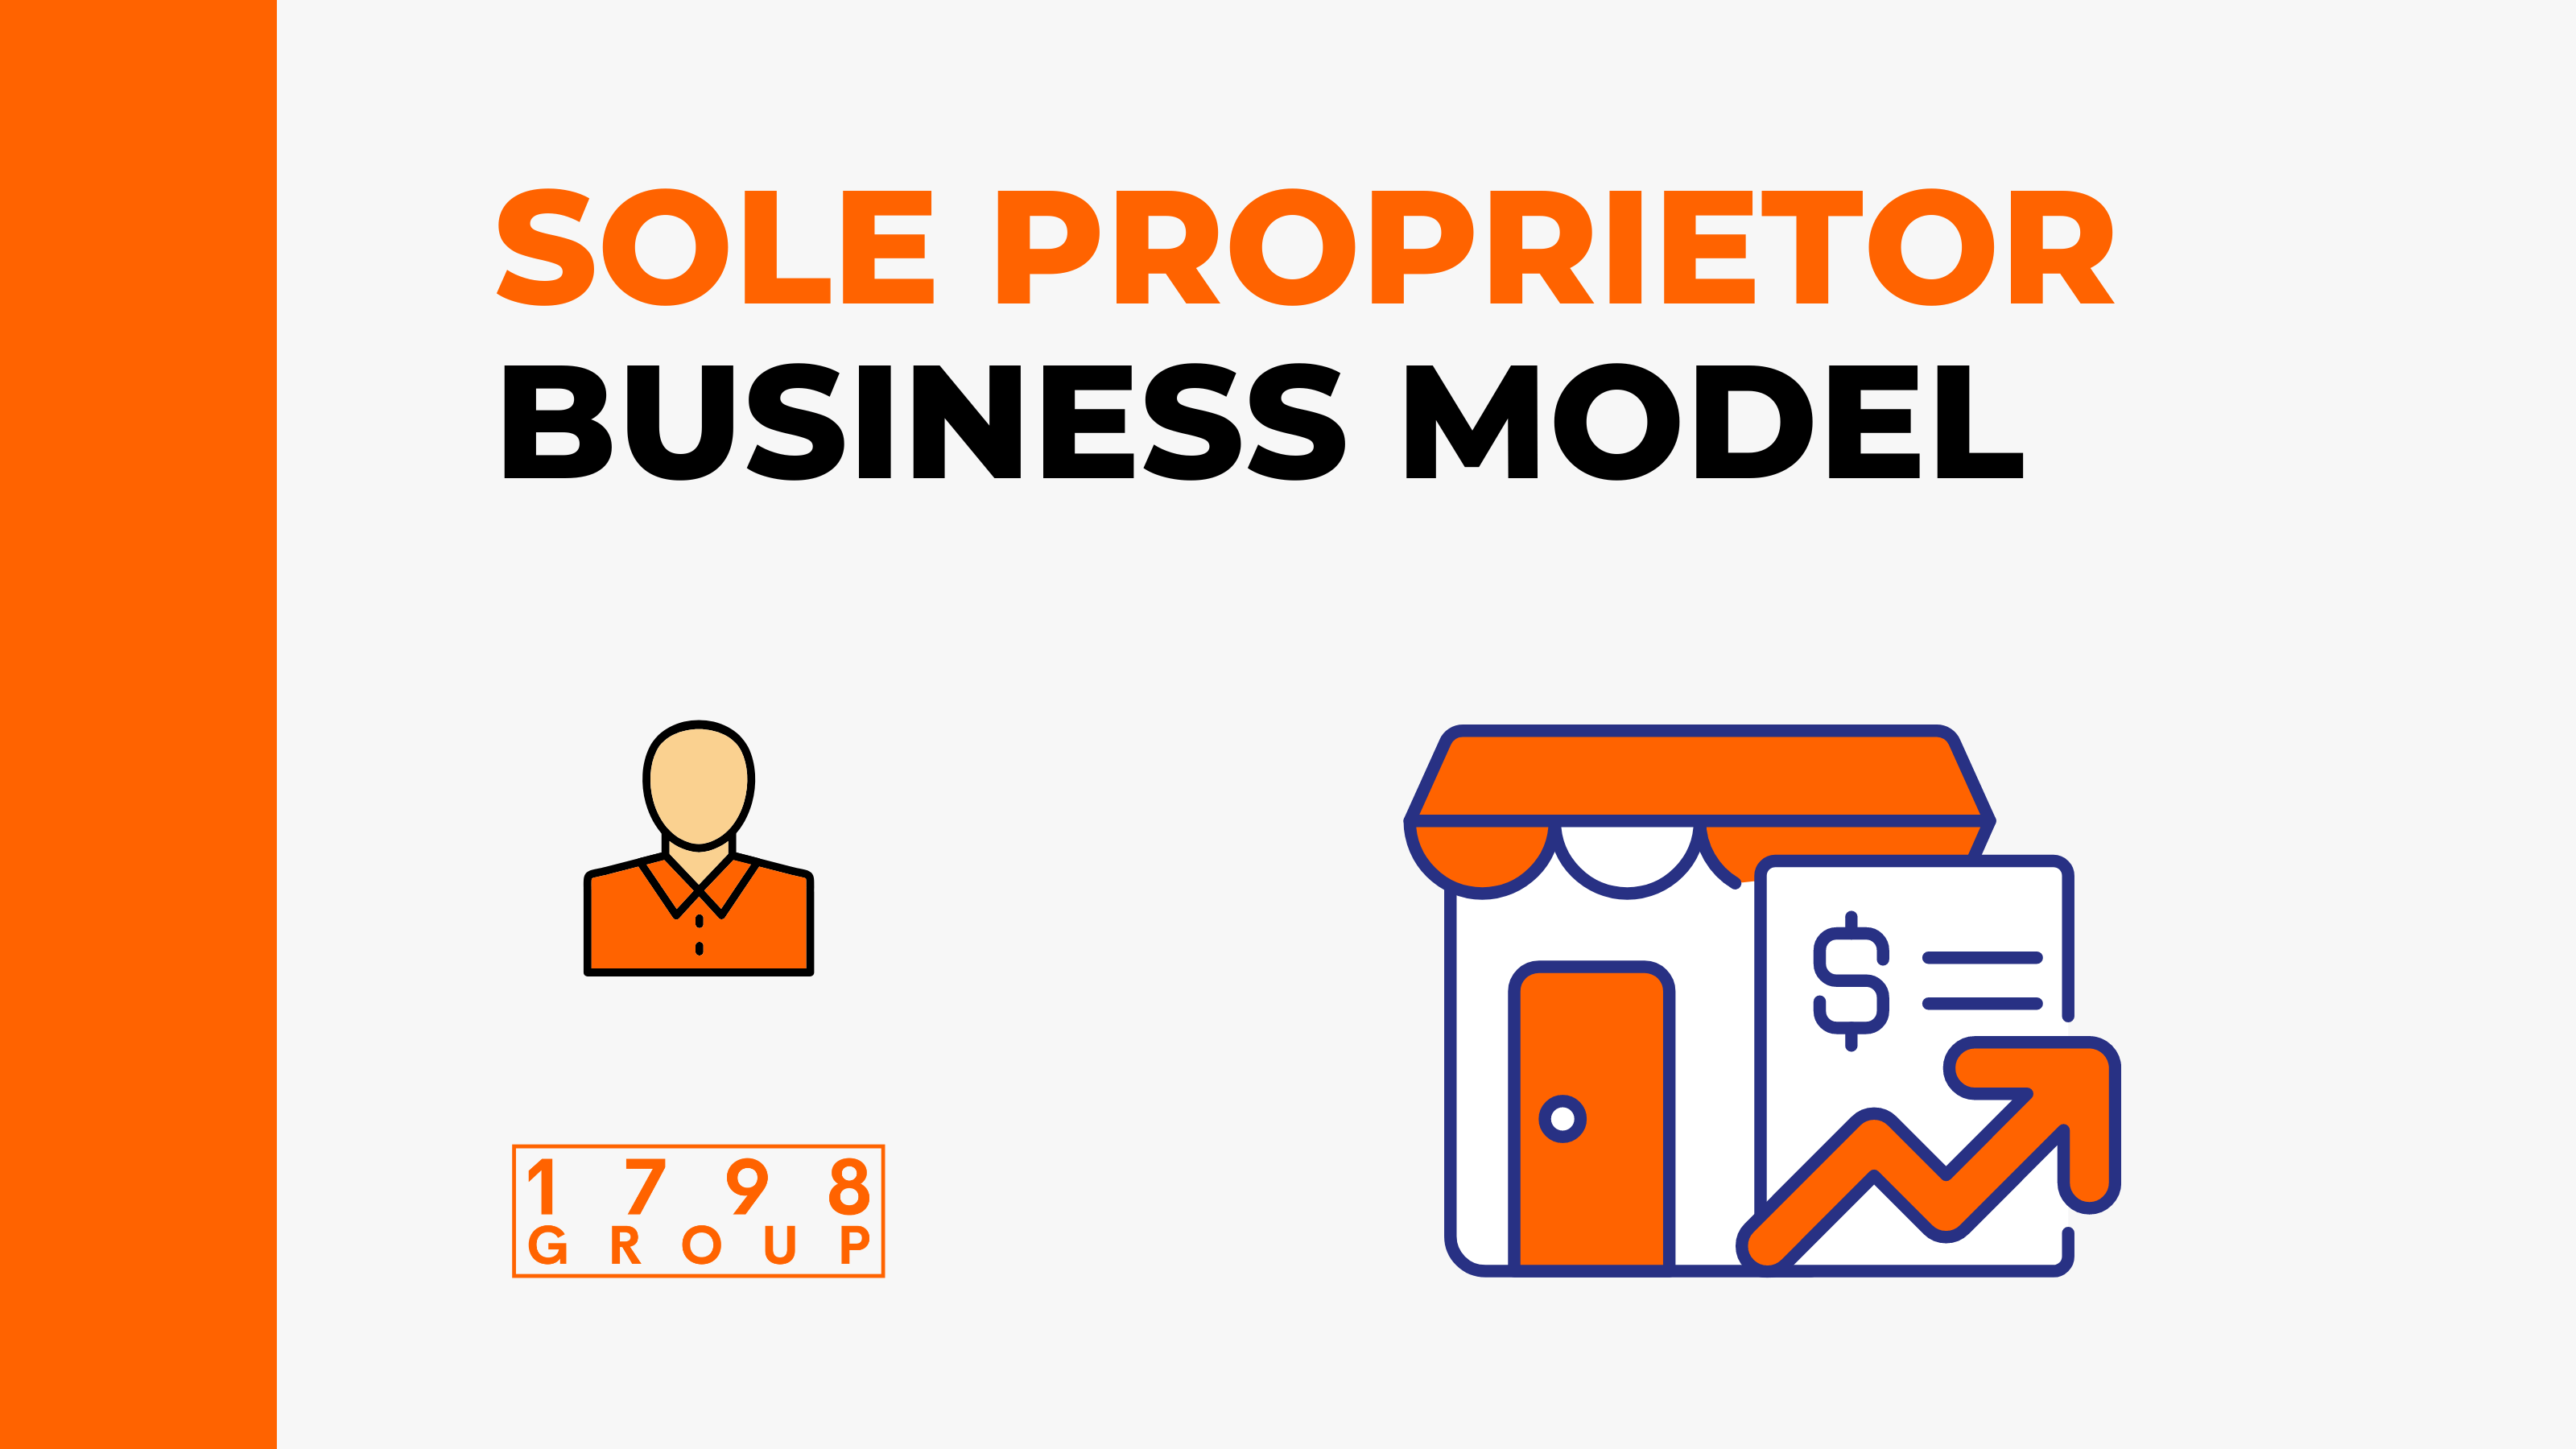 The Sole Proprietor Business Model